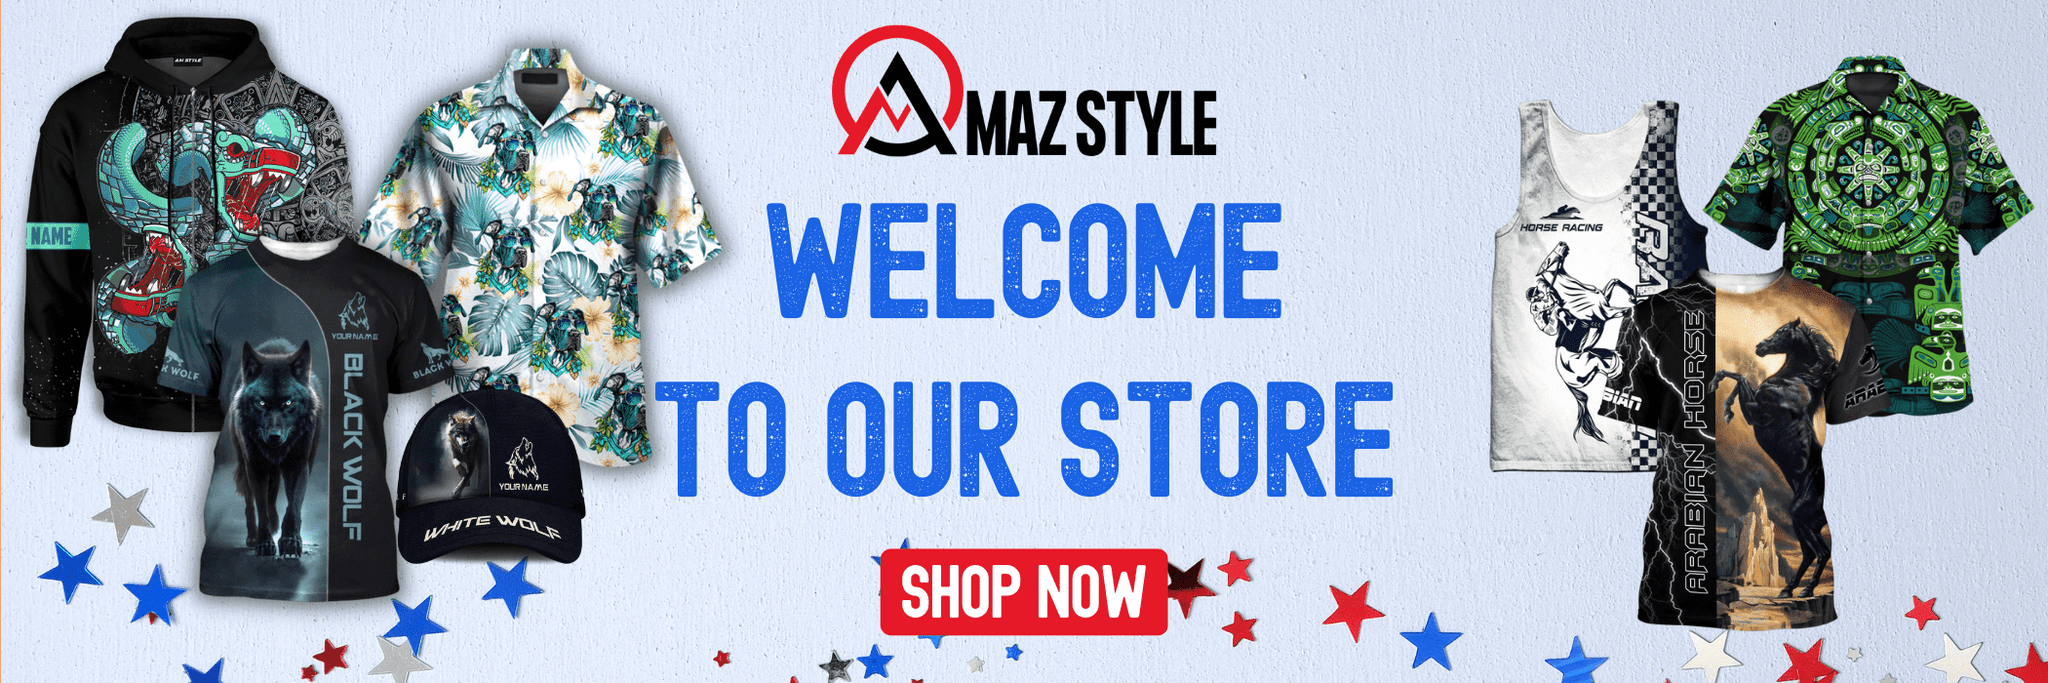 amazstyle-banner-new-year-sale